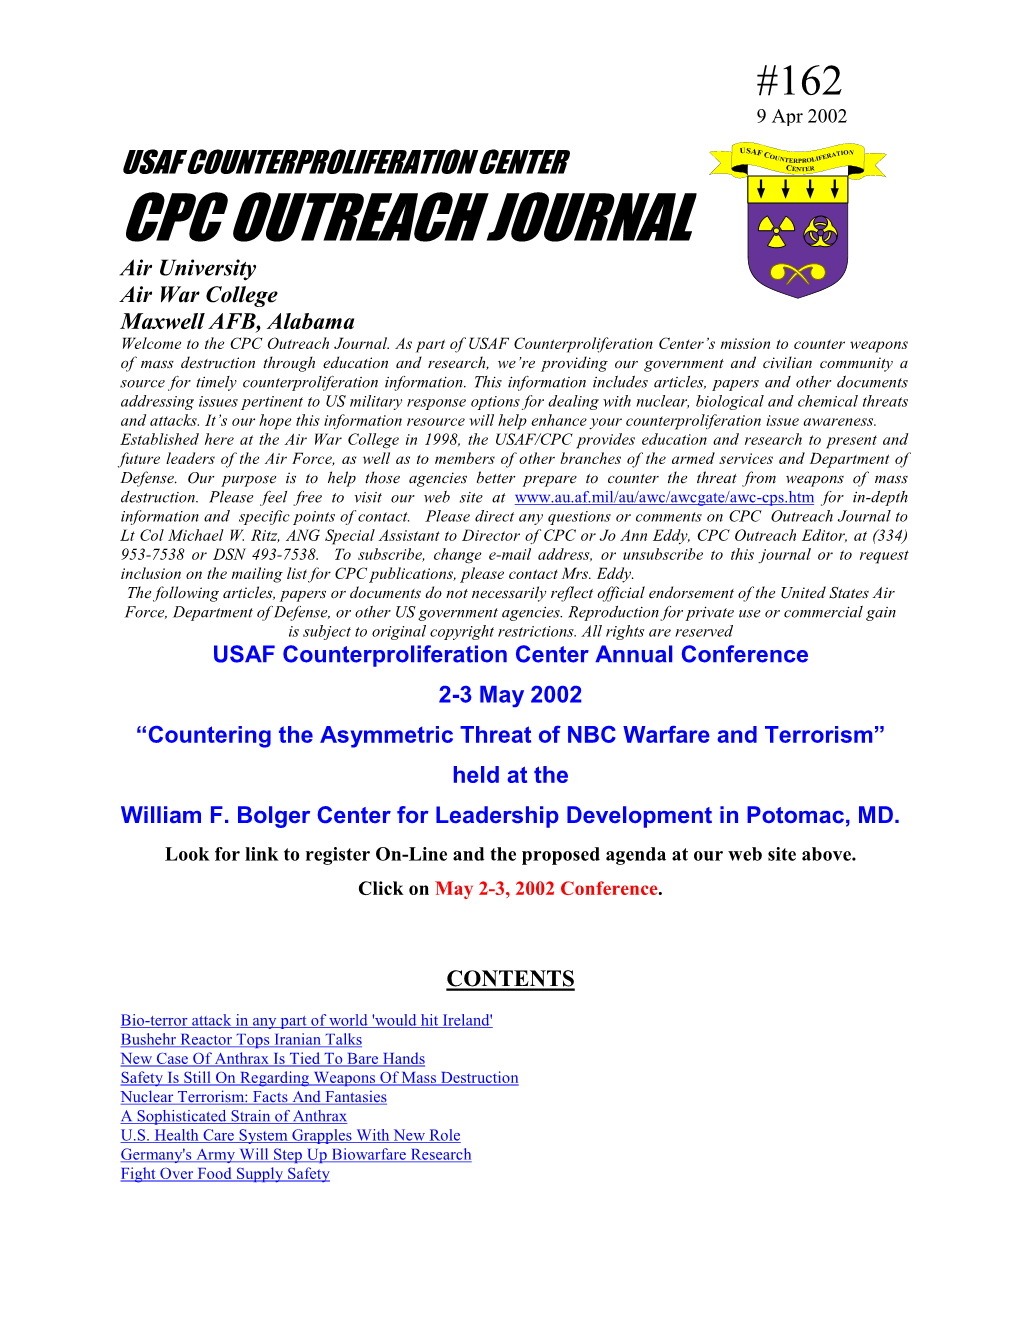 CPC Outreach Journal #162